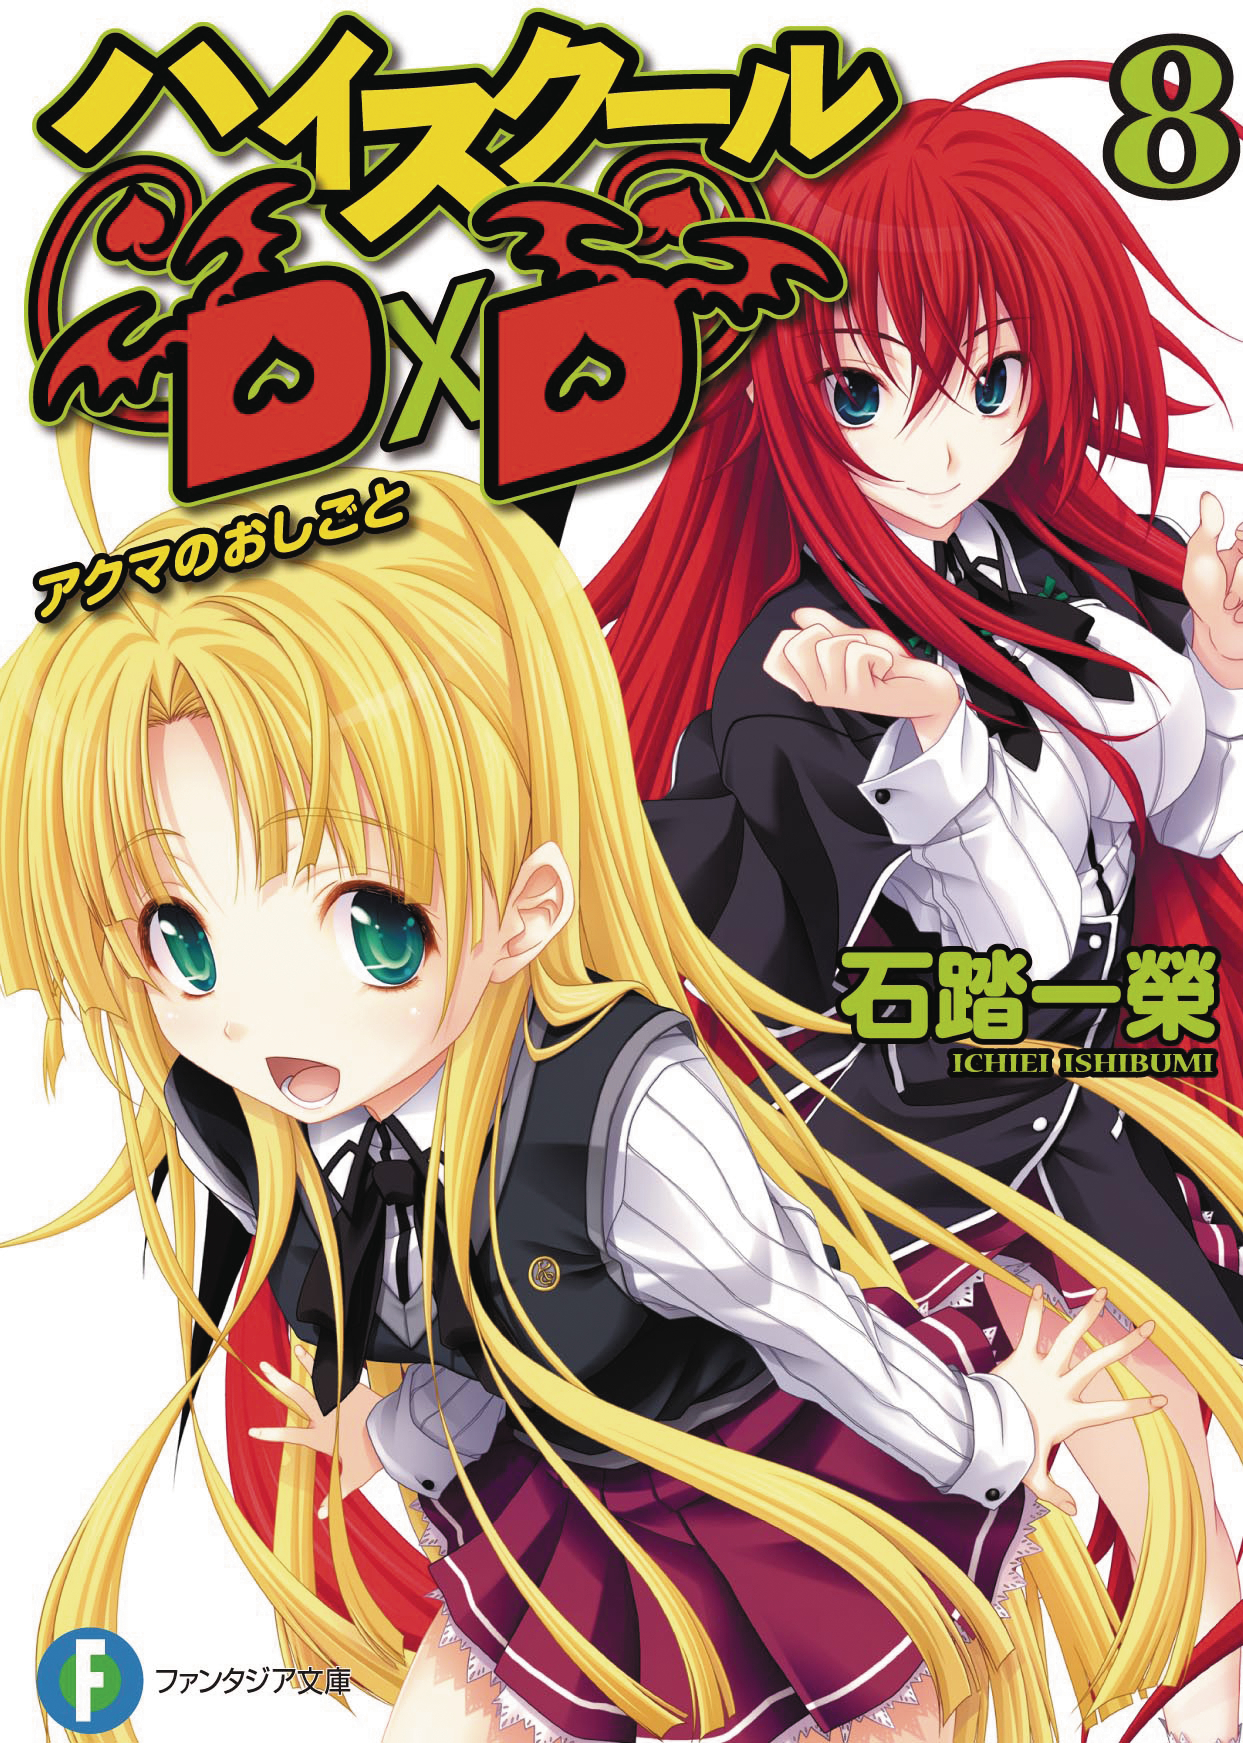 High School DxD manga Series by Ichiei Ishibumi